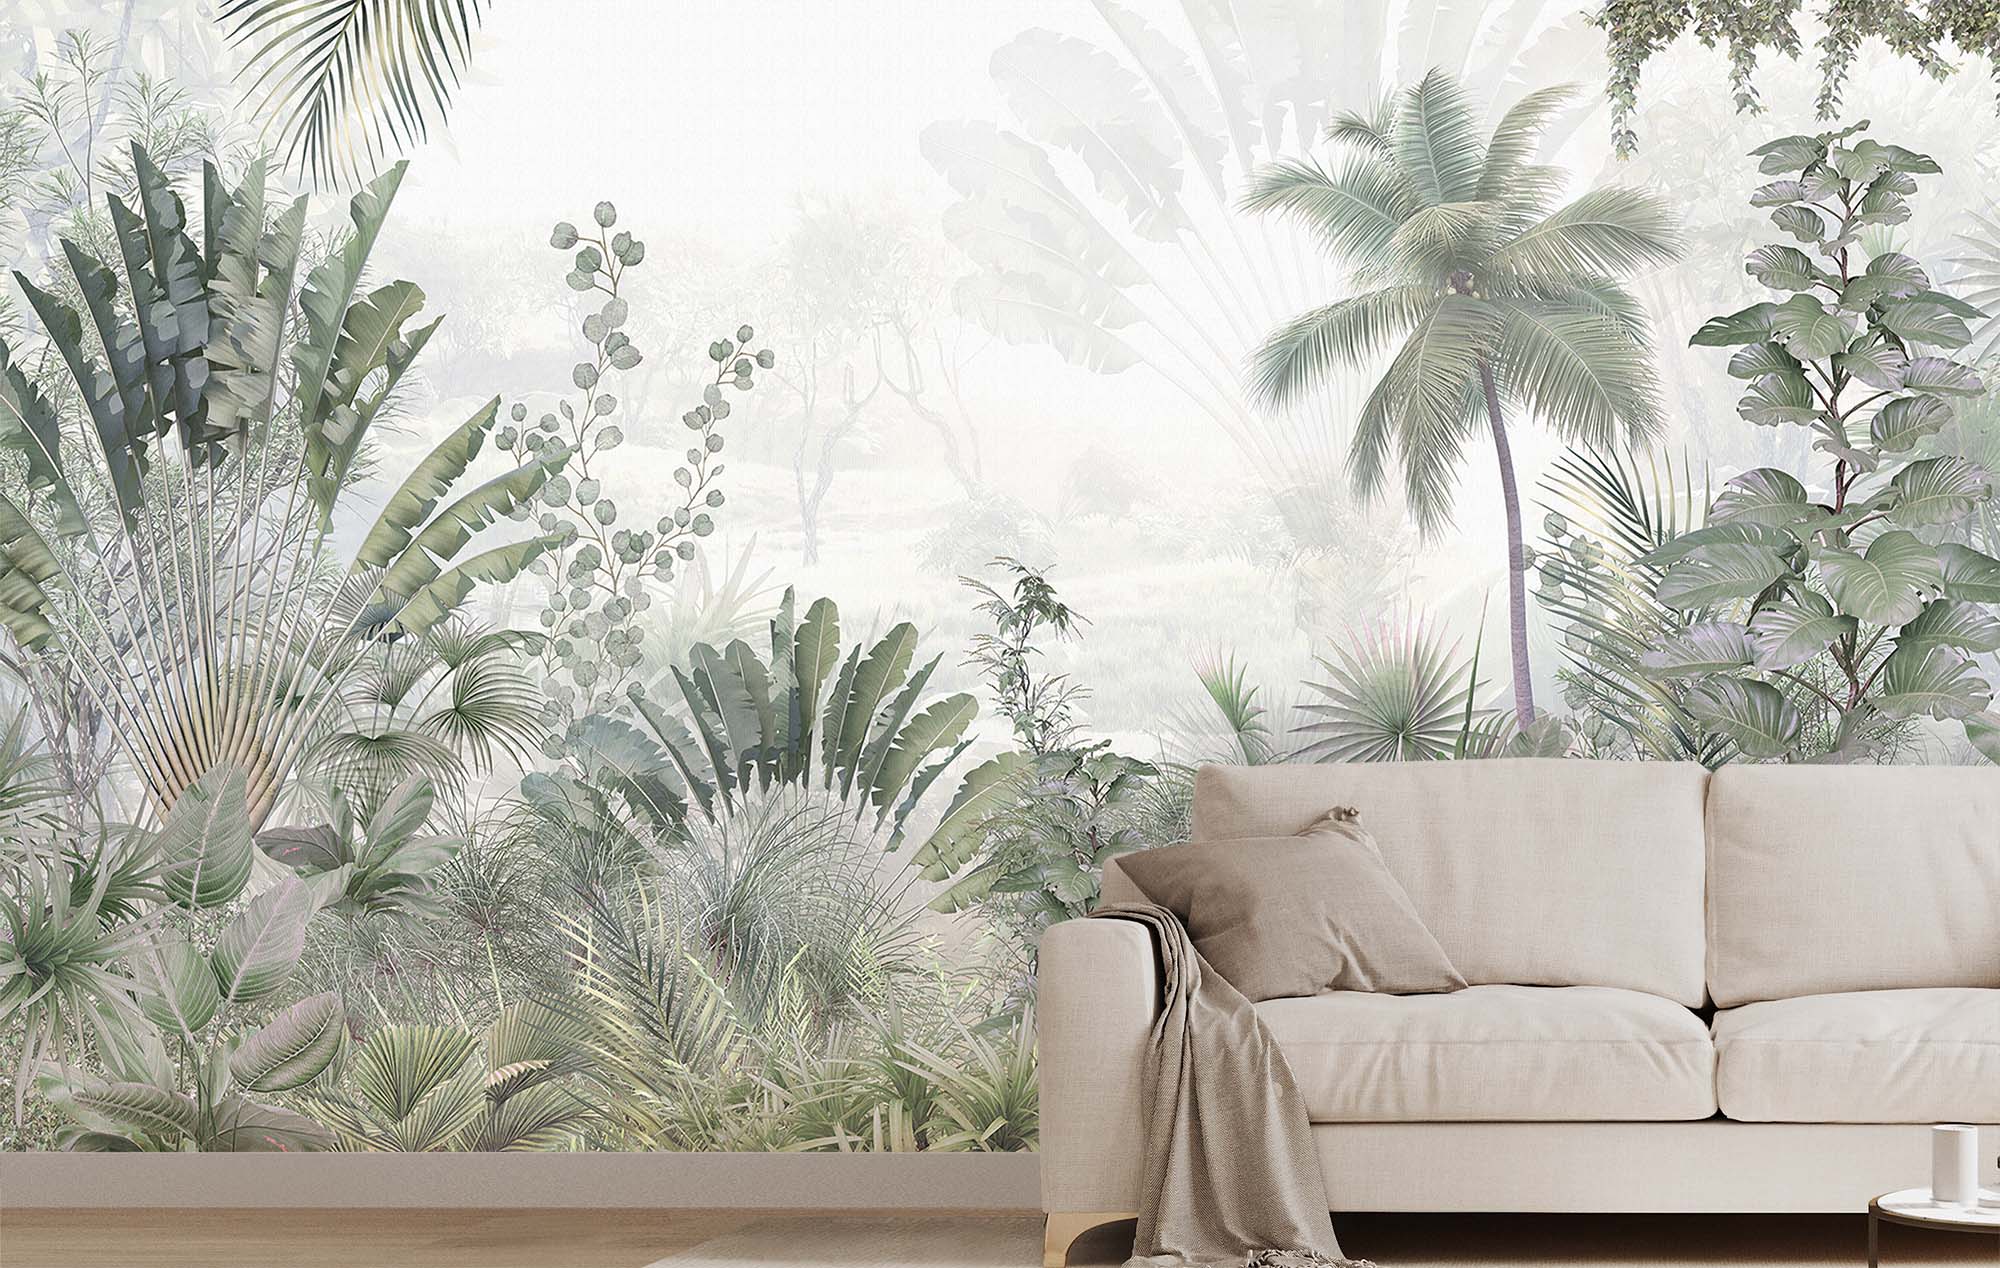 Forage Geometric Jungle Leaf Wallpaper Living Room Metallic